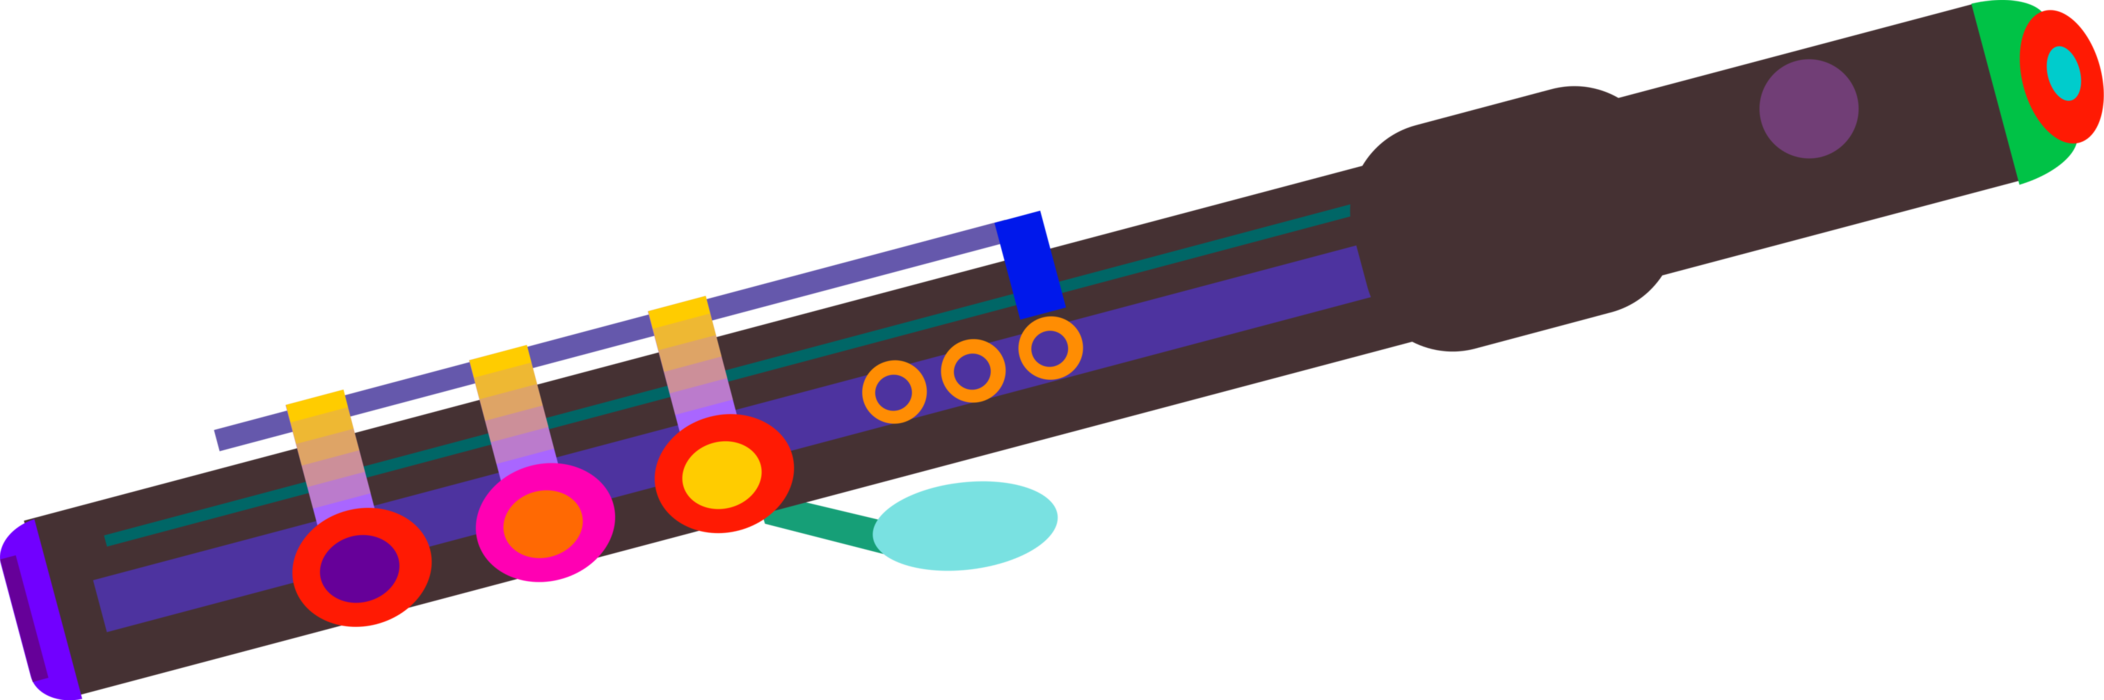 Vector Illustration of Flute Reedless Wind Musical Instrument 